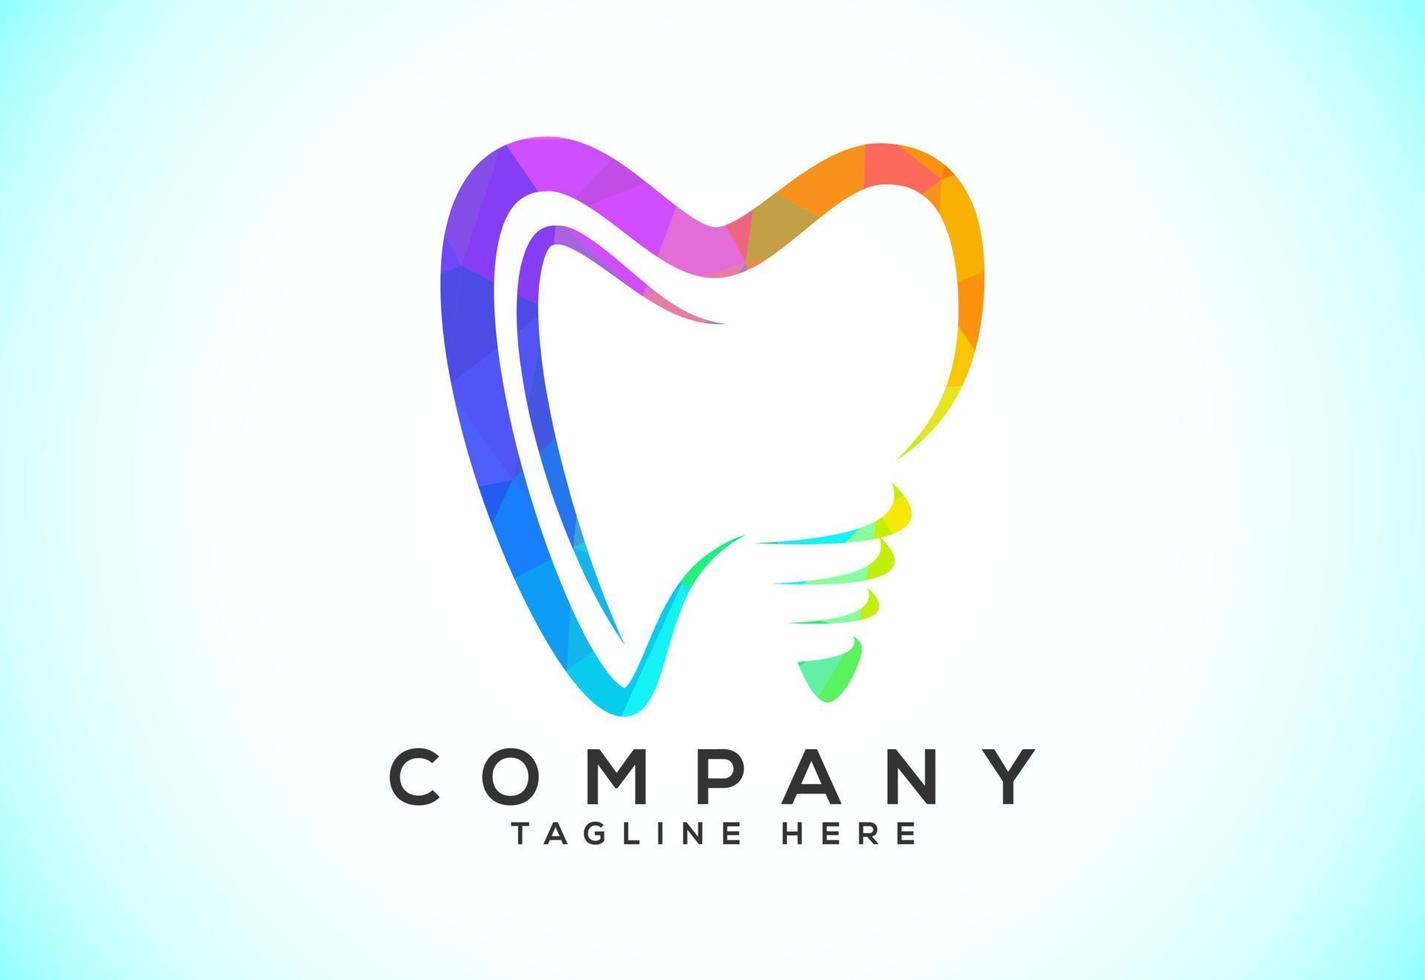 veelhoekige tand tandheelkundig logo. laag poly stijl tandheelkundig kliniek logo vector illustratie.